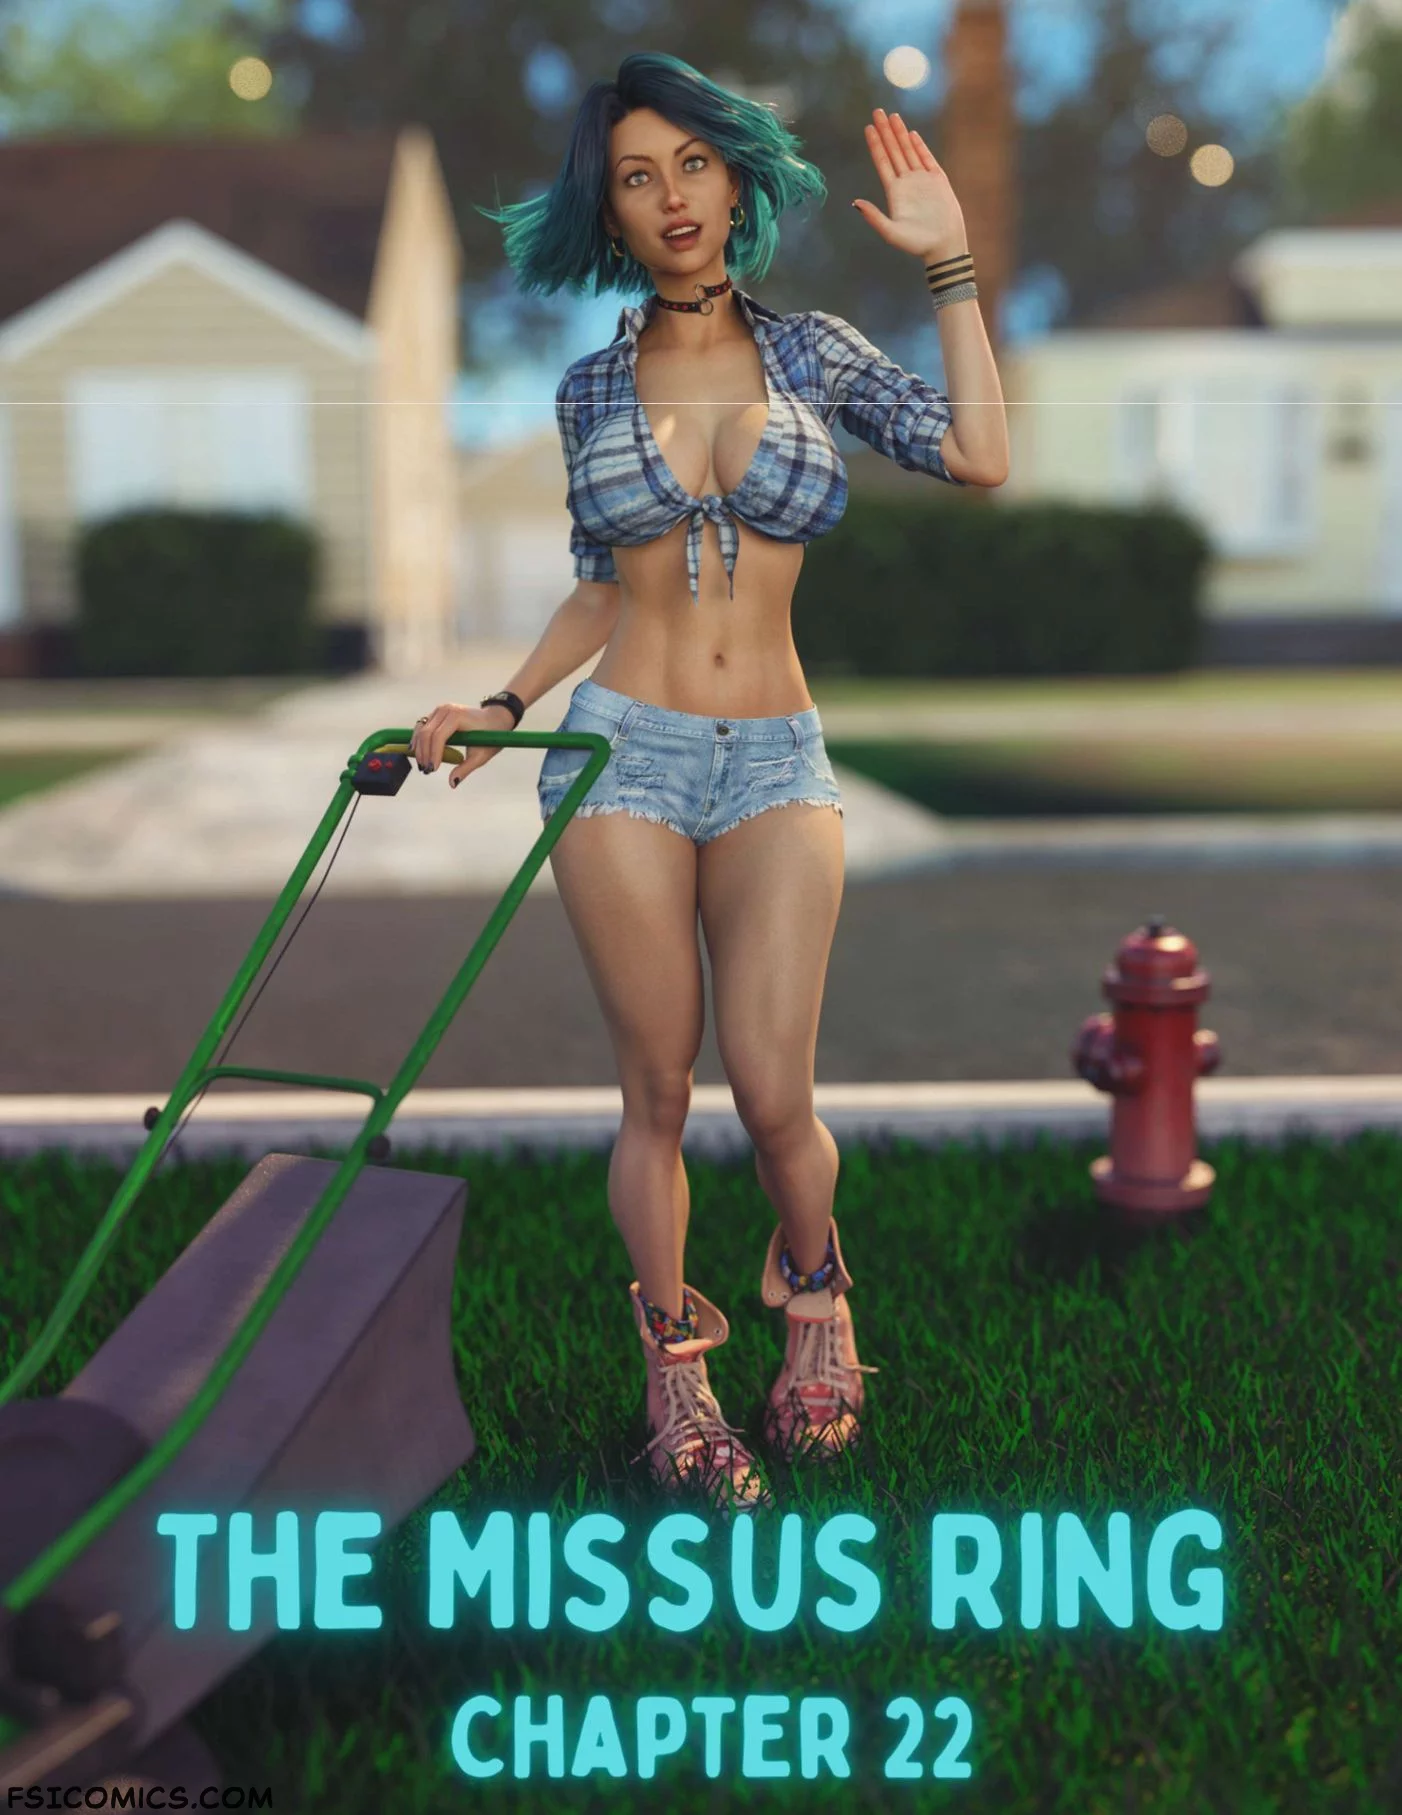 The Missus Ring Chapter 22 - Lexx228 | RawlyRawls - 87 - FSIComics